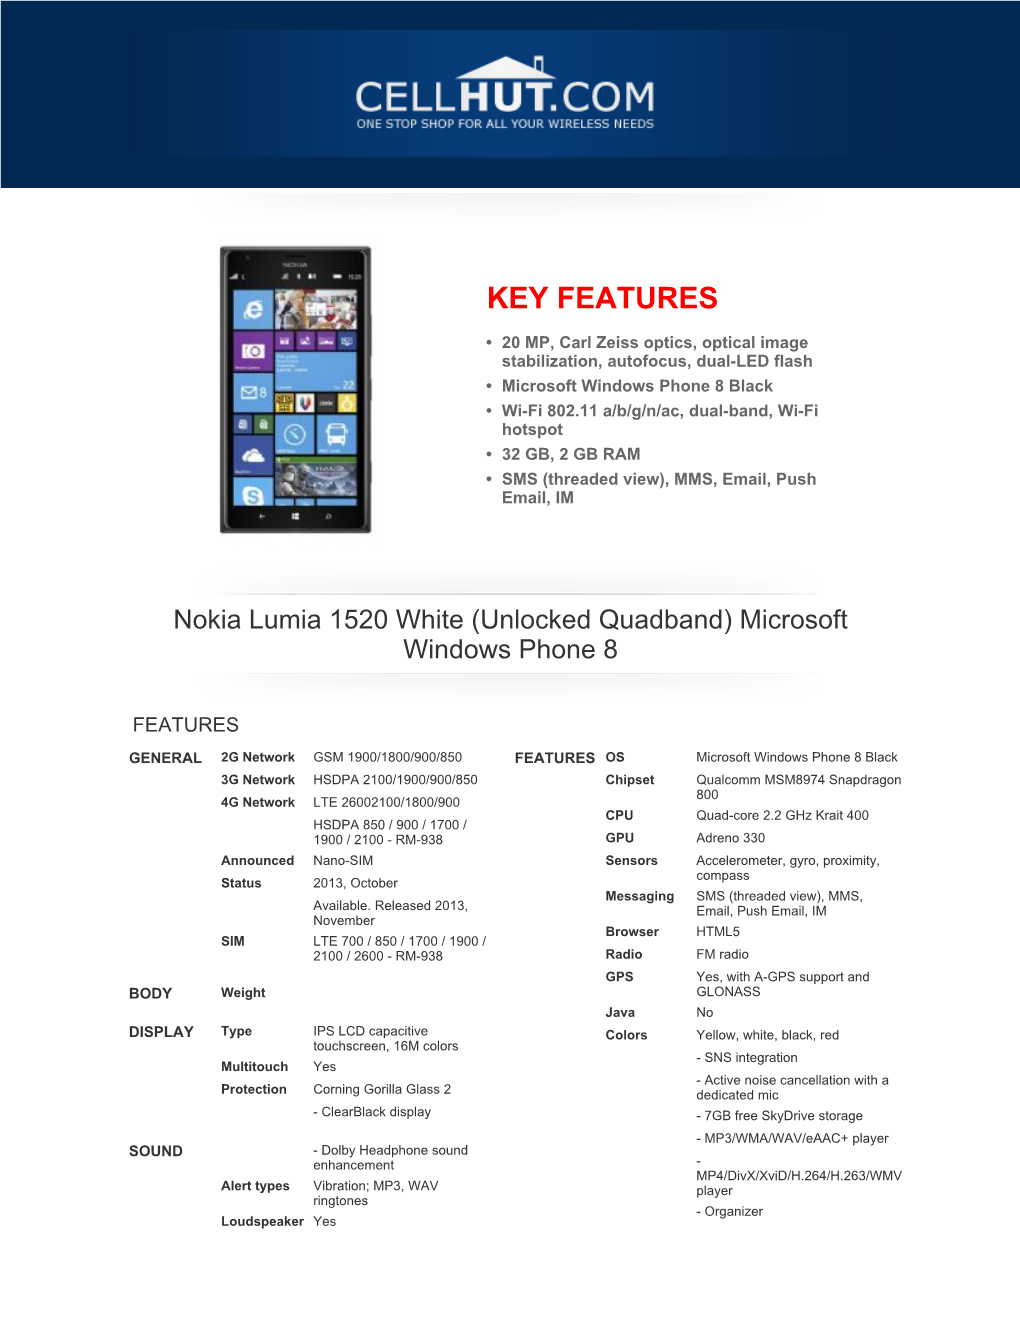 Nokia Lumia 1520 White (Unlocked Quadband) Microsoft Windows Phone 8